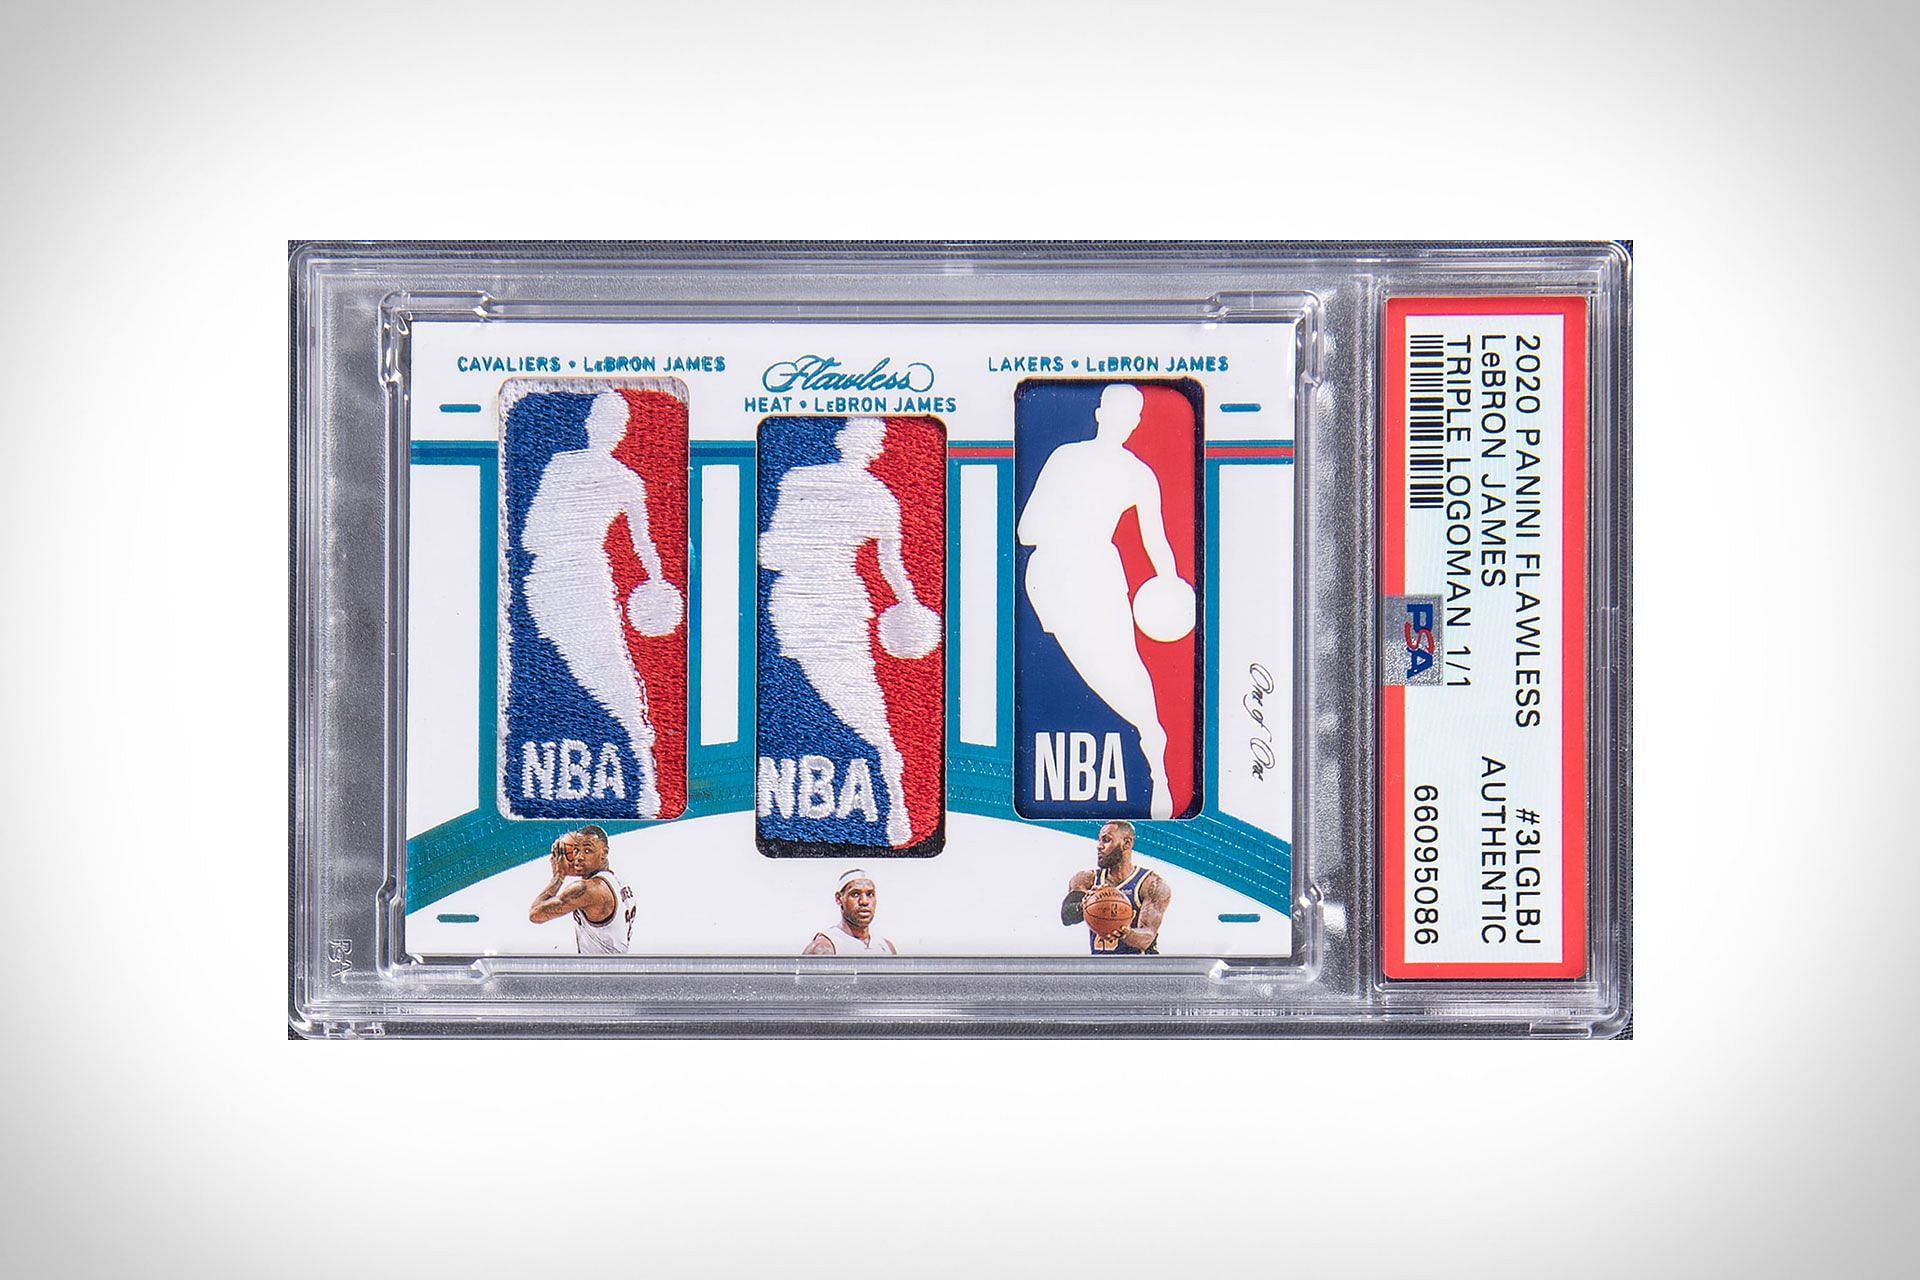 NBA Cards - LeBron James triple logoman card